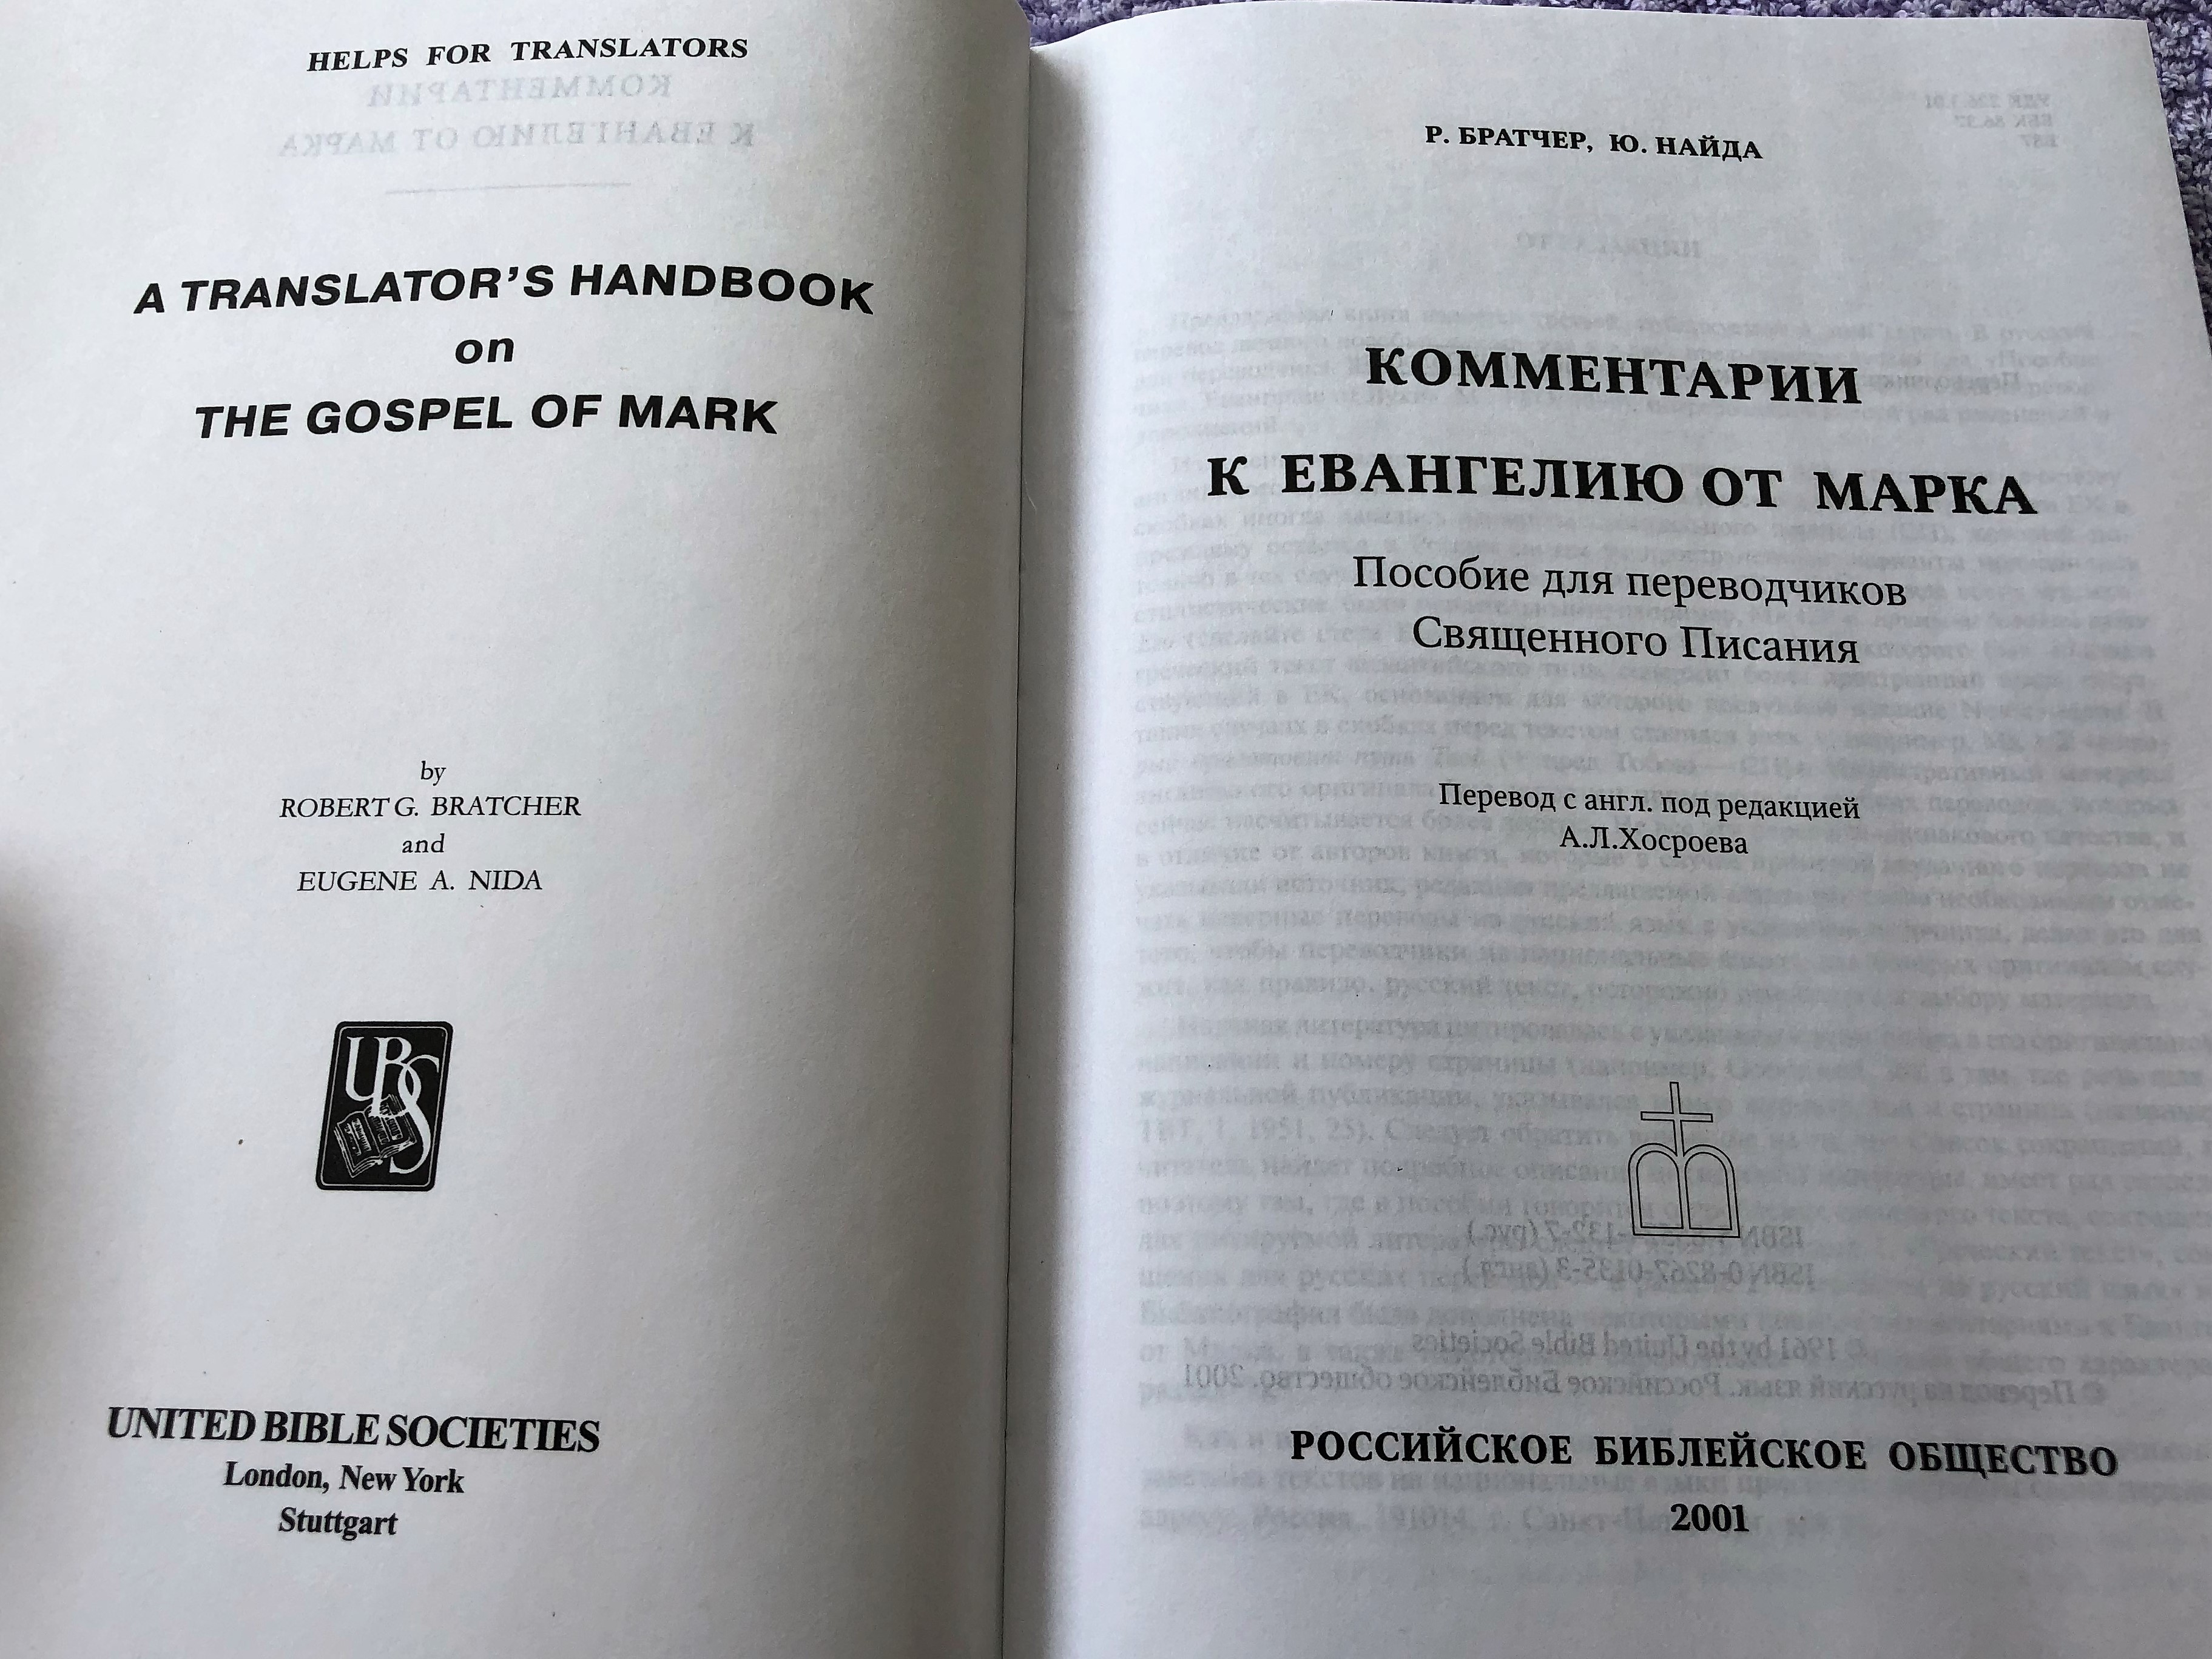 russian-language-edition-of-the-helps-for-bible-translators-a-translator-s-handbook-on-the-gospel-of-mark-3-.jpg